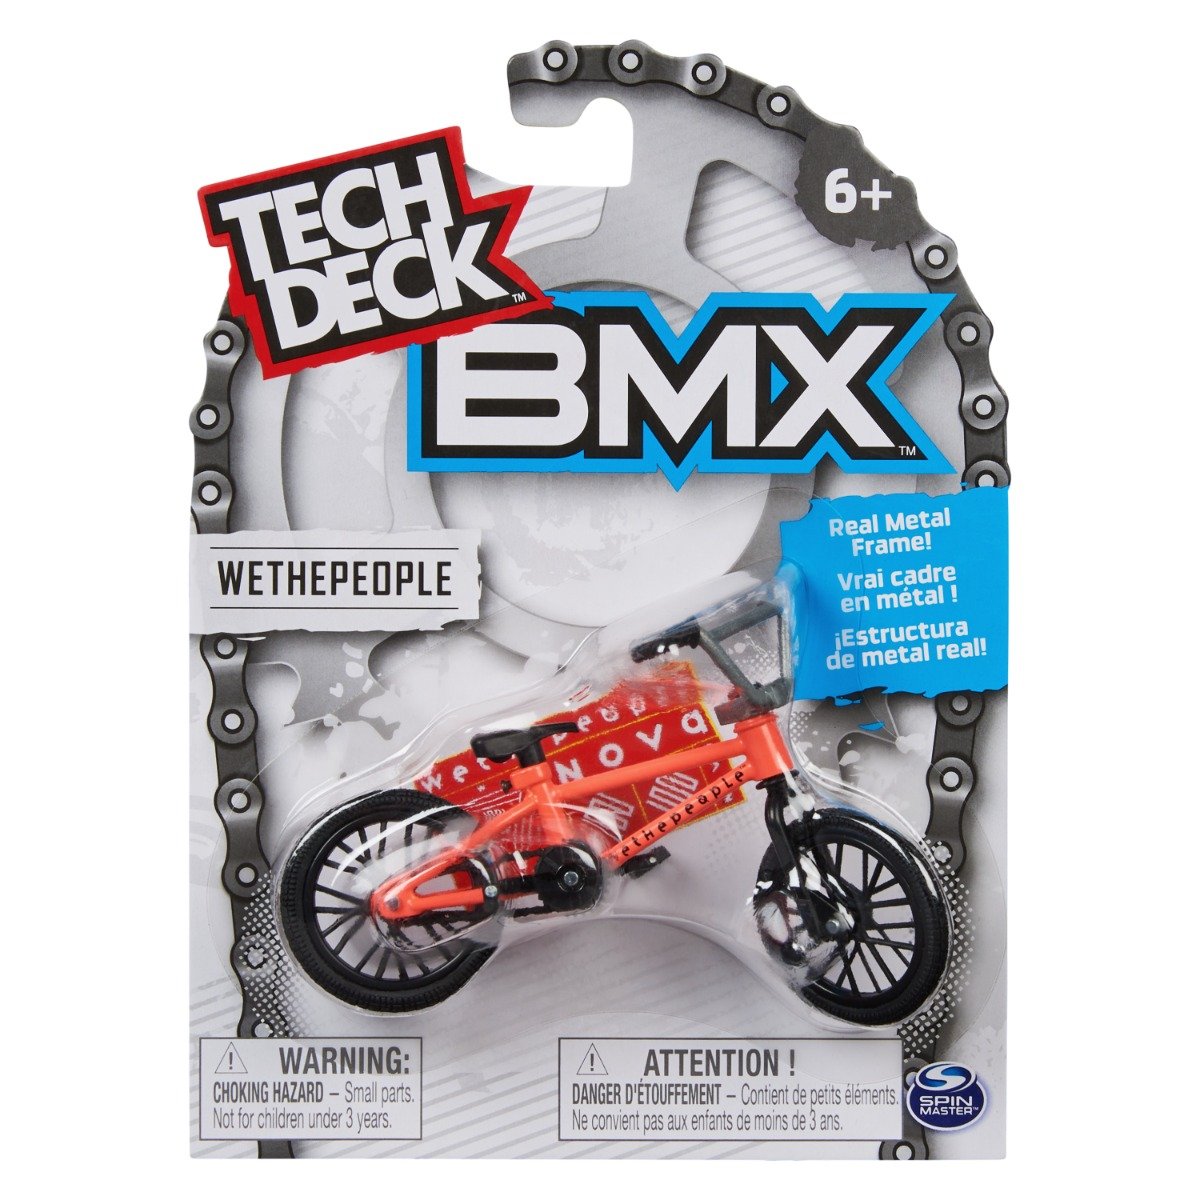 Mini BMX bike, Tech Deck, We The People, 20140831